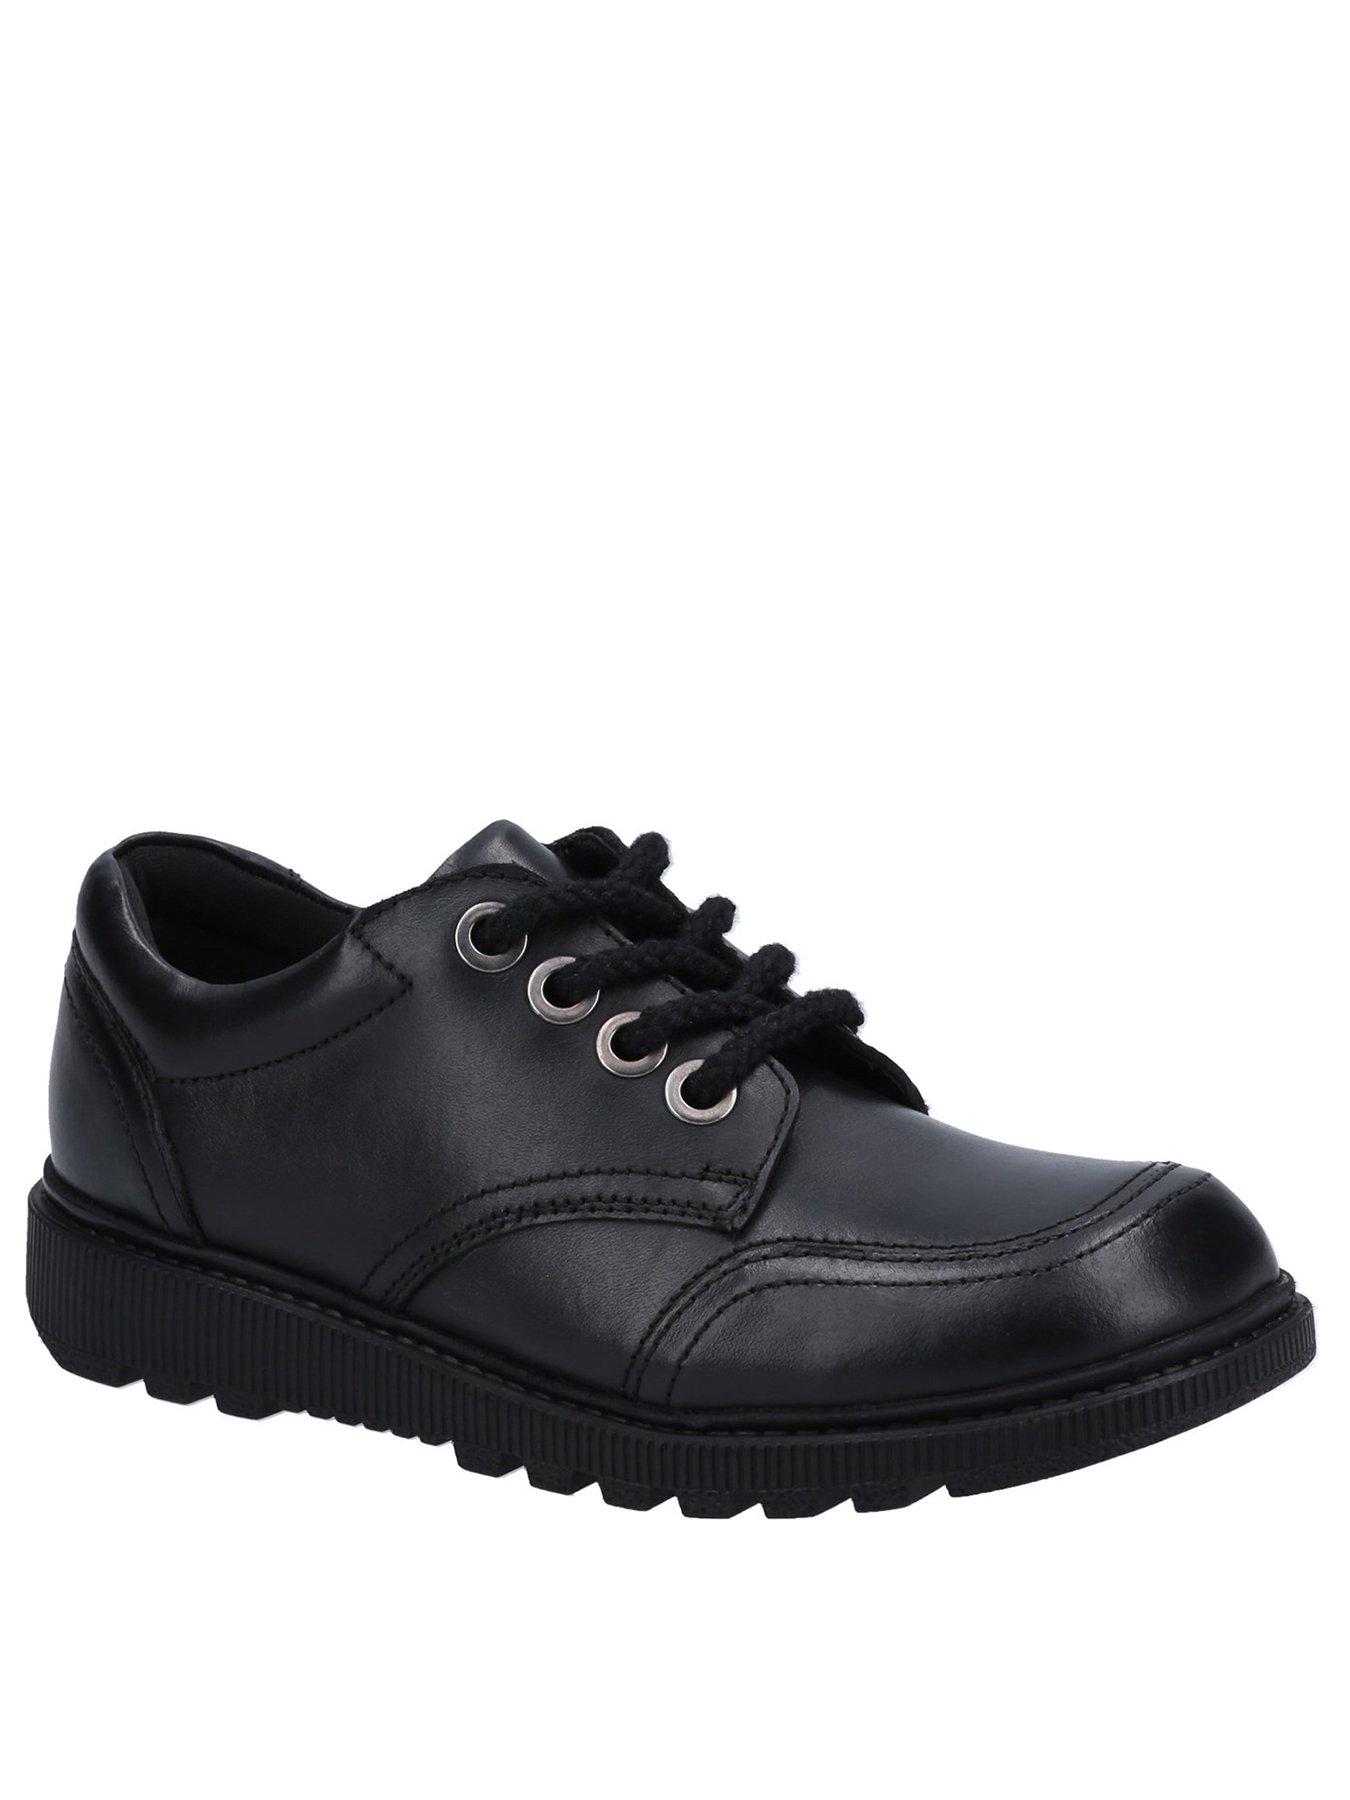 Kids Kiera Junior School Shoes - Black